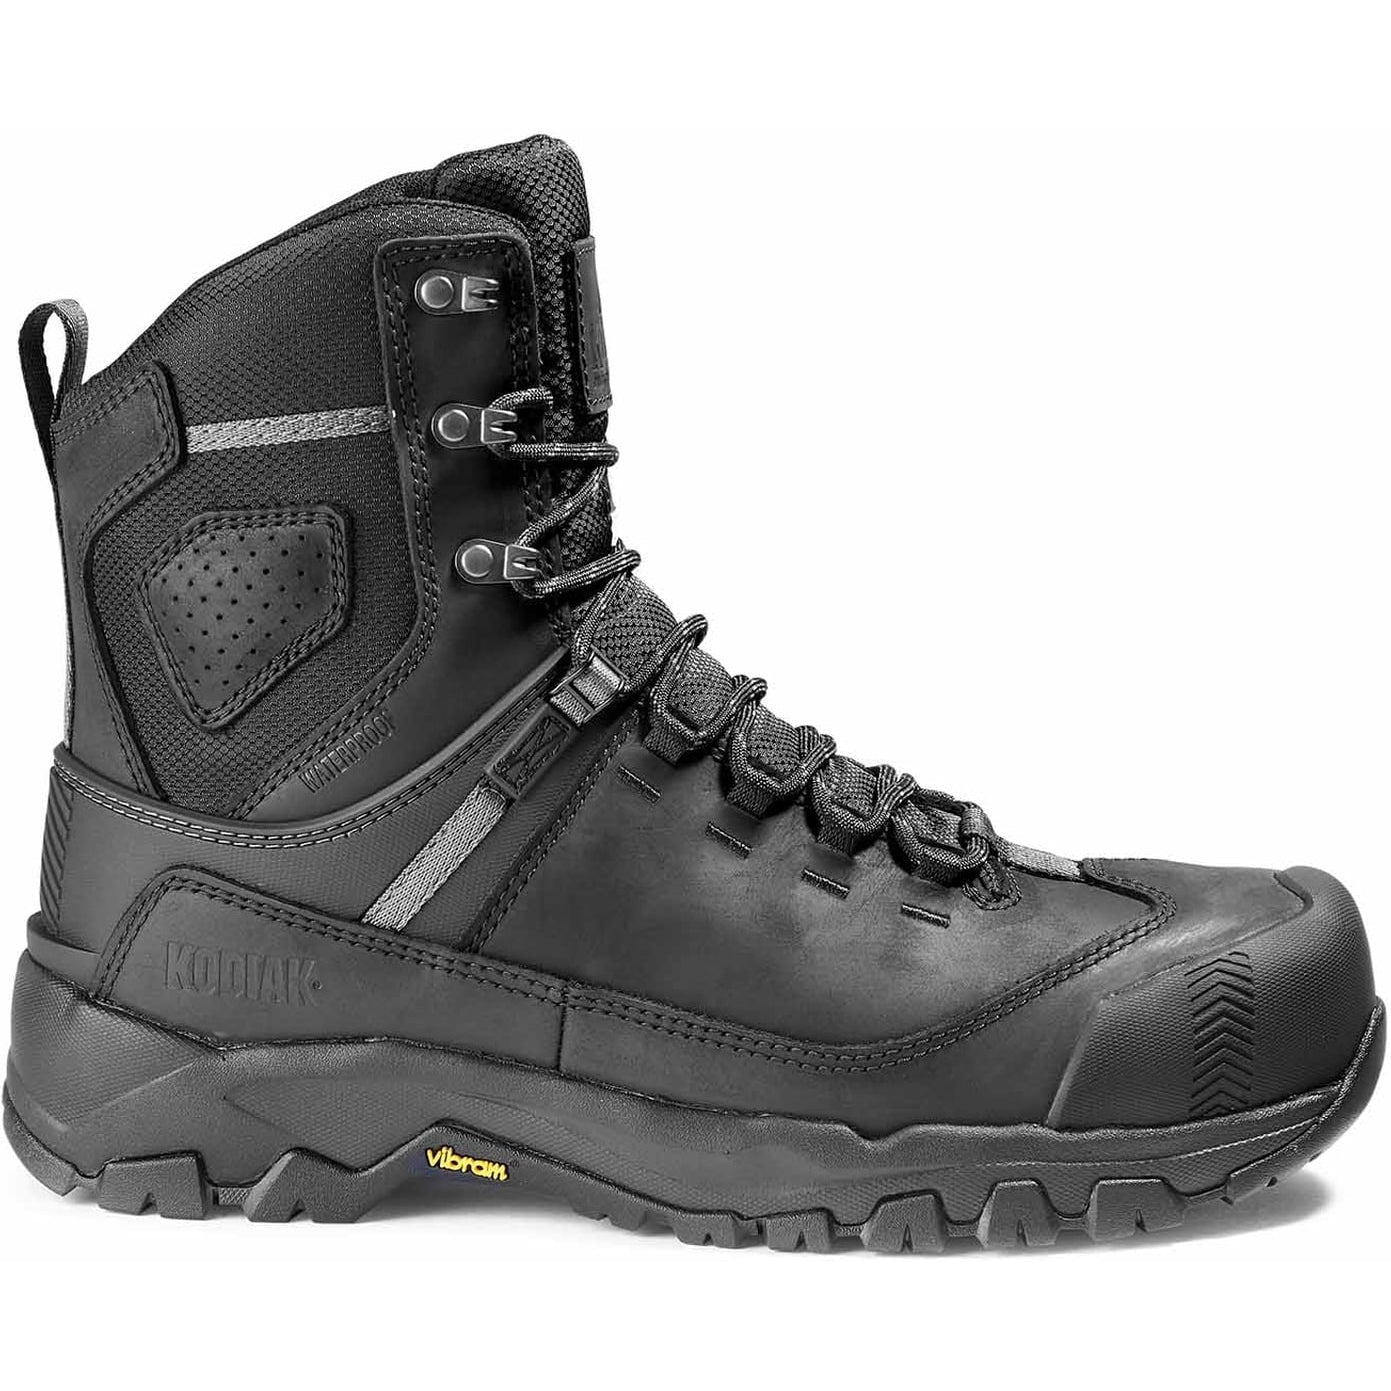 Kodiak Men's Quest Bound 8" Comp Toe WP Safety Work Boot -Black- 4THHBK  - Overlook Boots